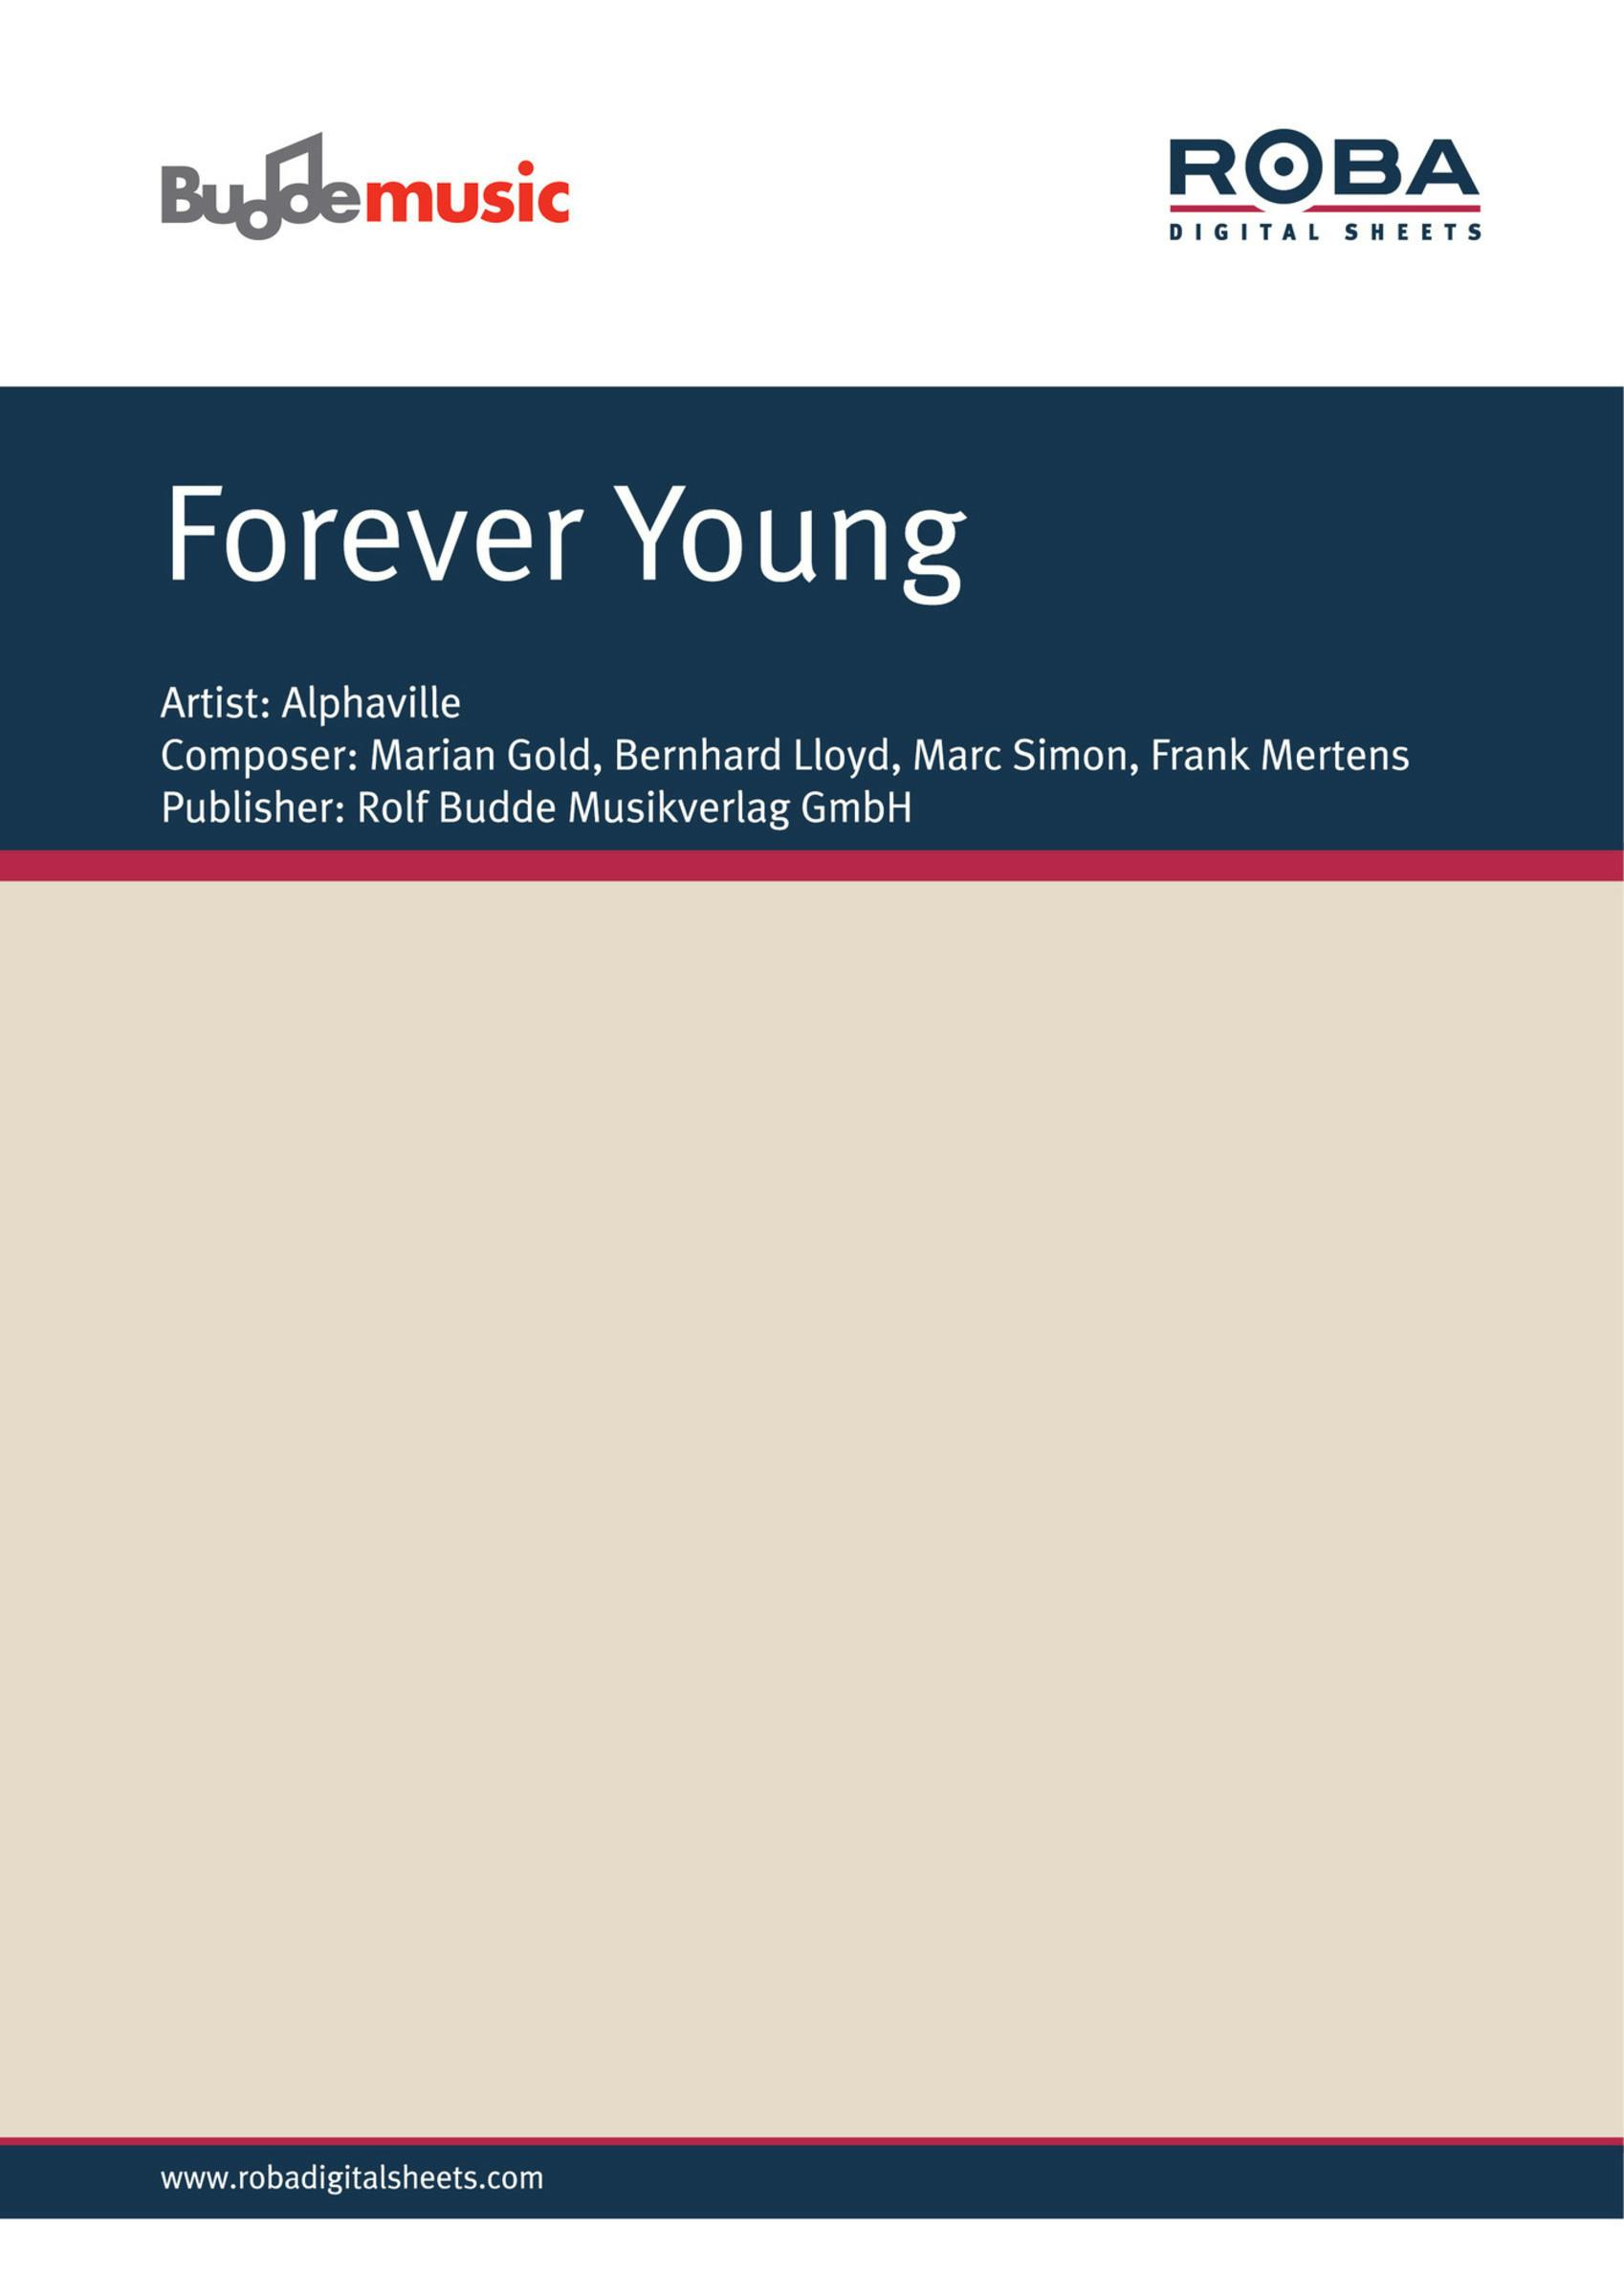 Forever Young - Marian Gold, Bernhard Lloyd, Wolfgang Loos-Wilhelm, Marc Simon, Frank Mertens